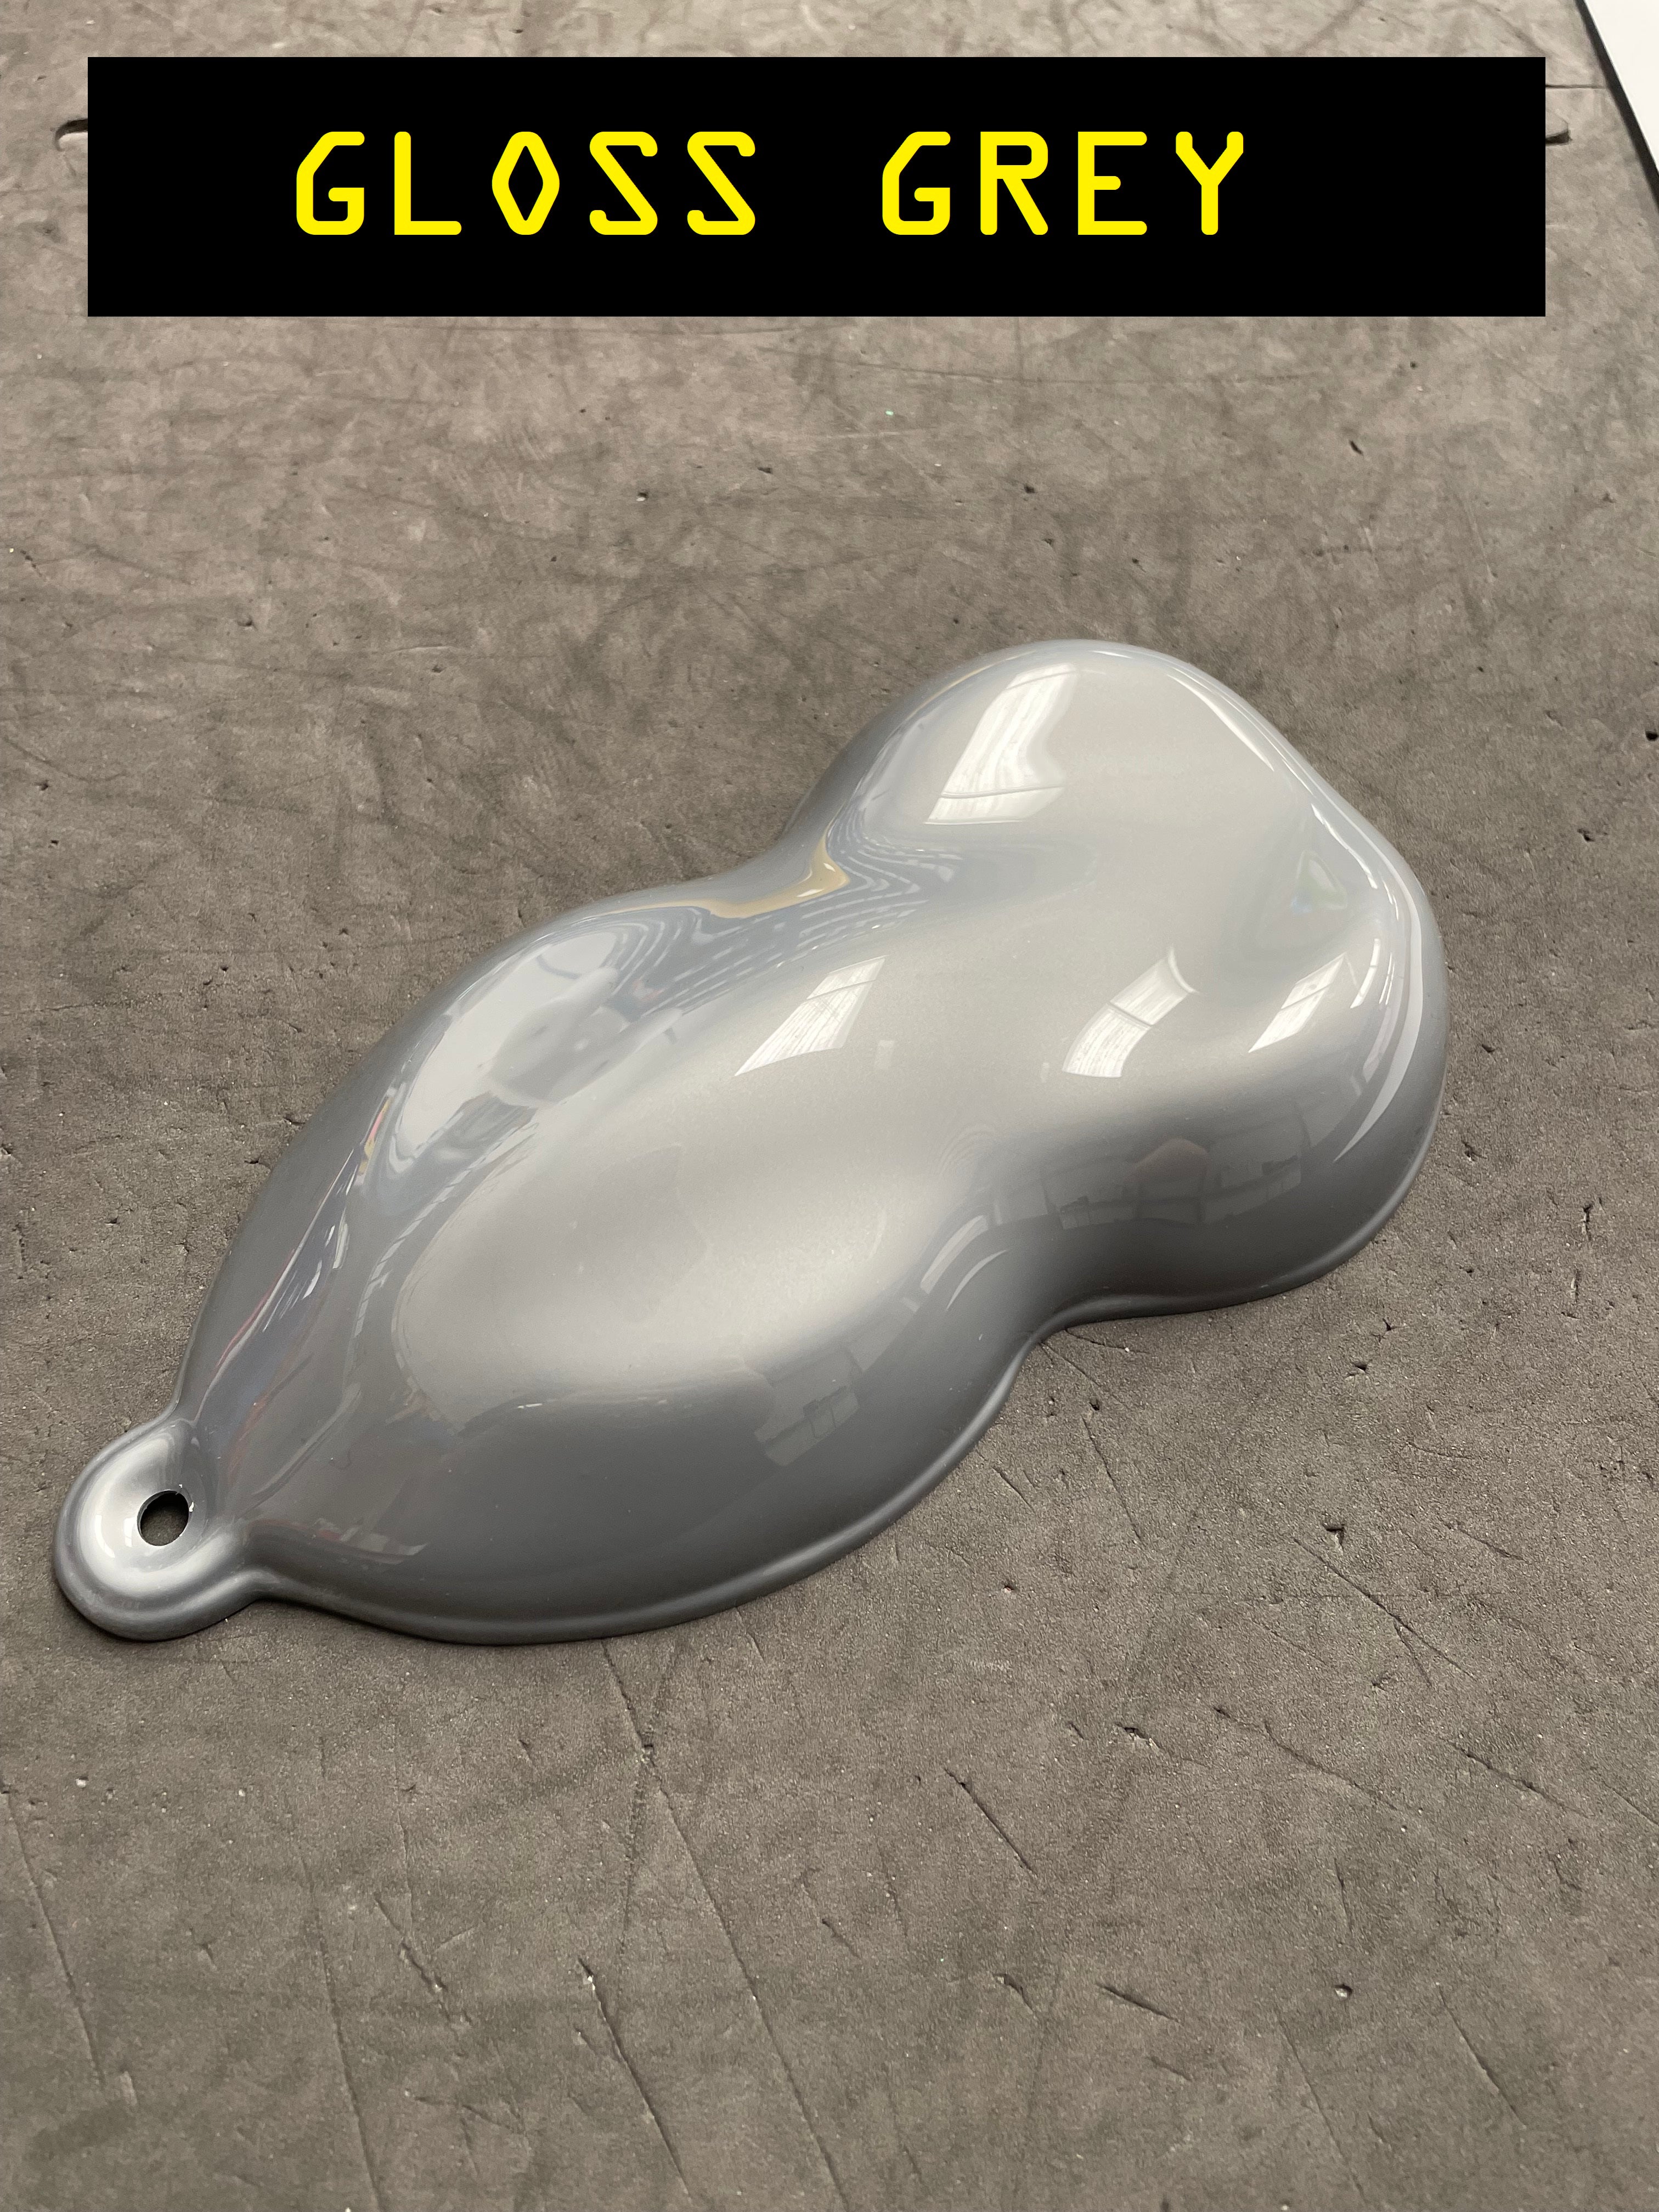 Proform Petrol Engine Oil Cap Cover - Mazda MX5/Miata Mk3/3.5/NC (Plastic Finishes)